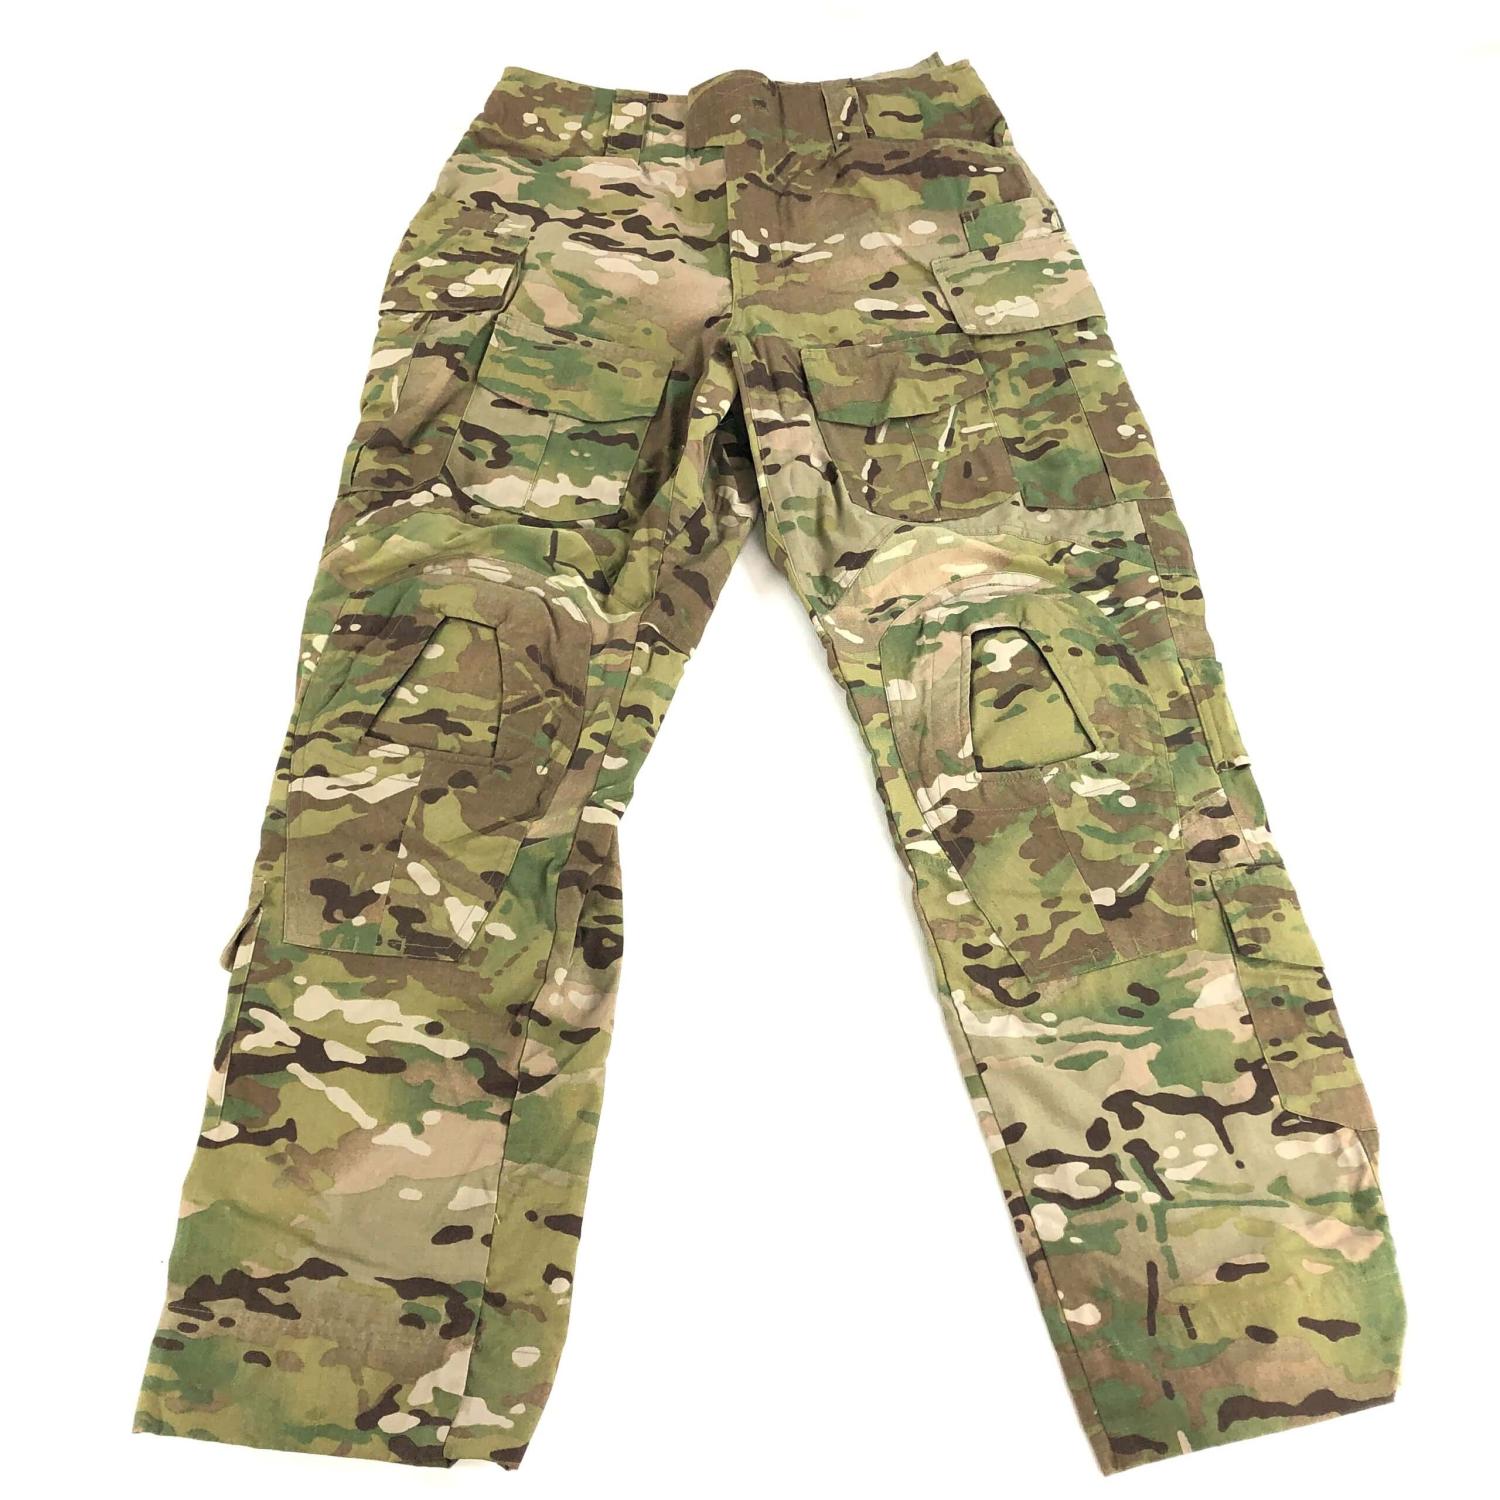 Тактические брюки Crye Precision G3 FR Combat Pants (Drifire) Multicam тактические брюки crye precision g3 combat pants multicam